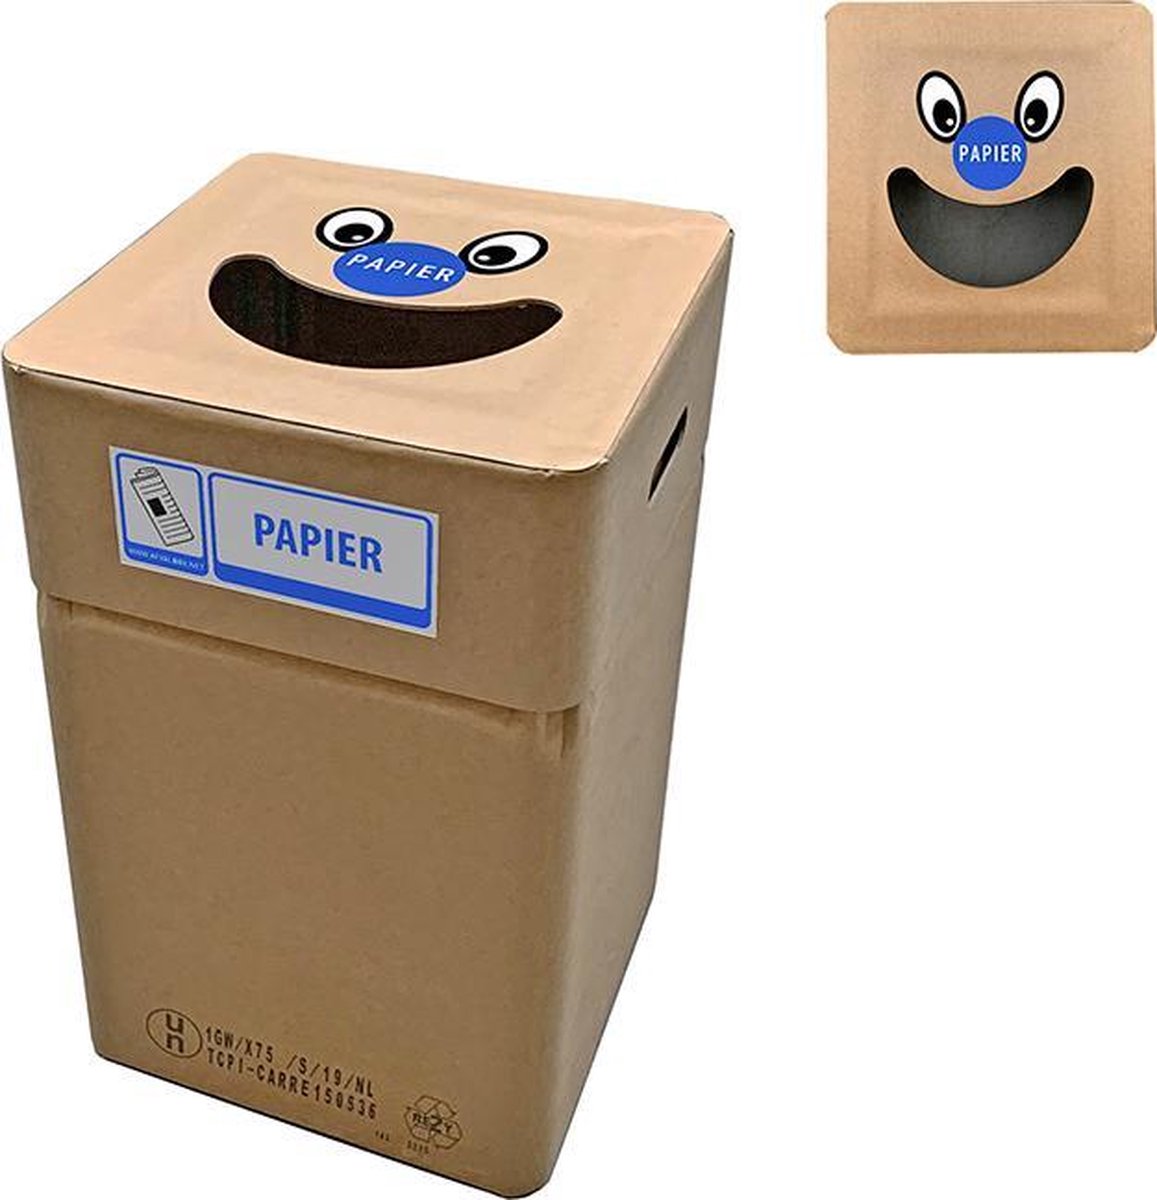 Kartonnen prullenbak/afvalbak Papier type smile (herbruikbaar)